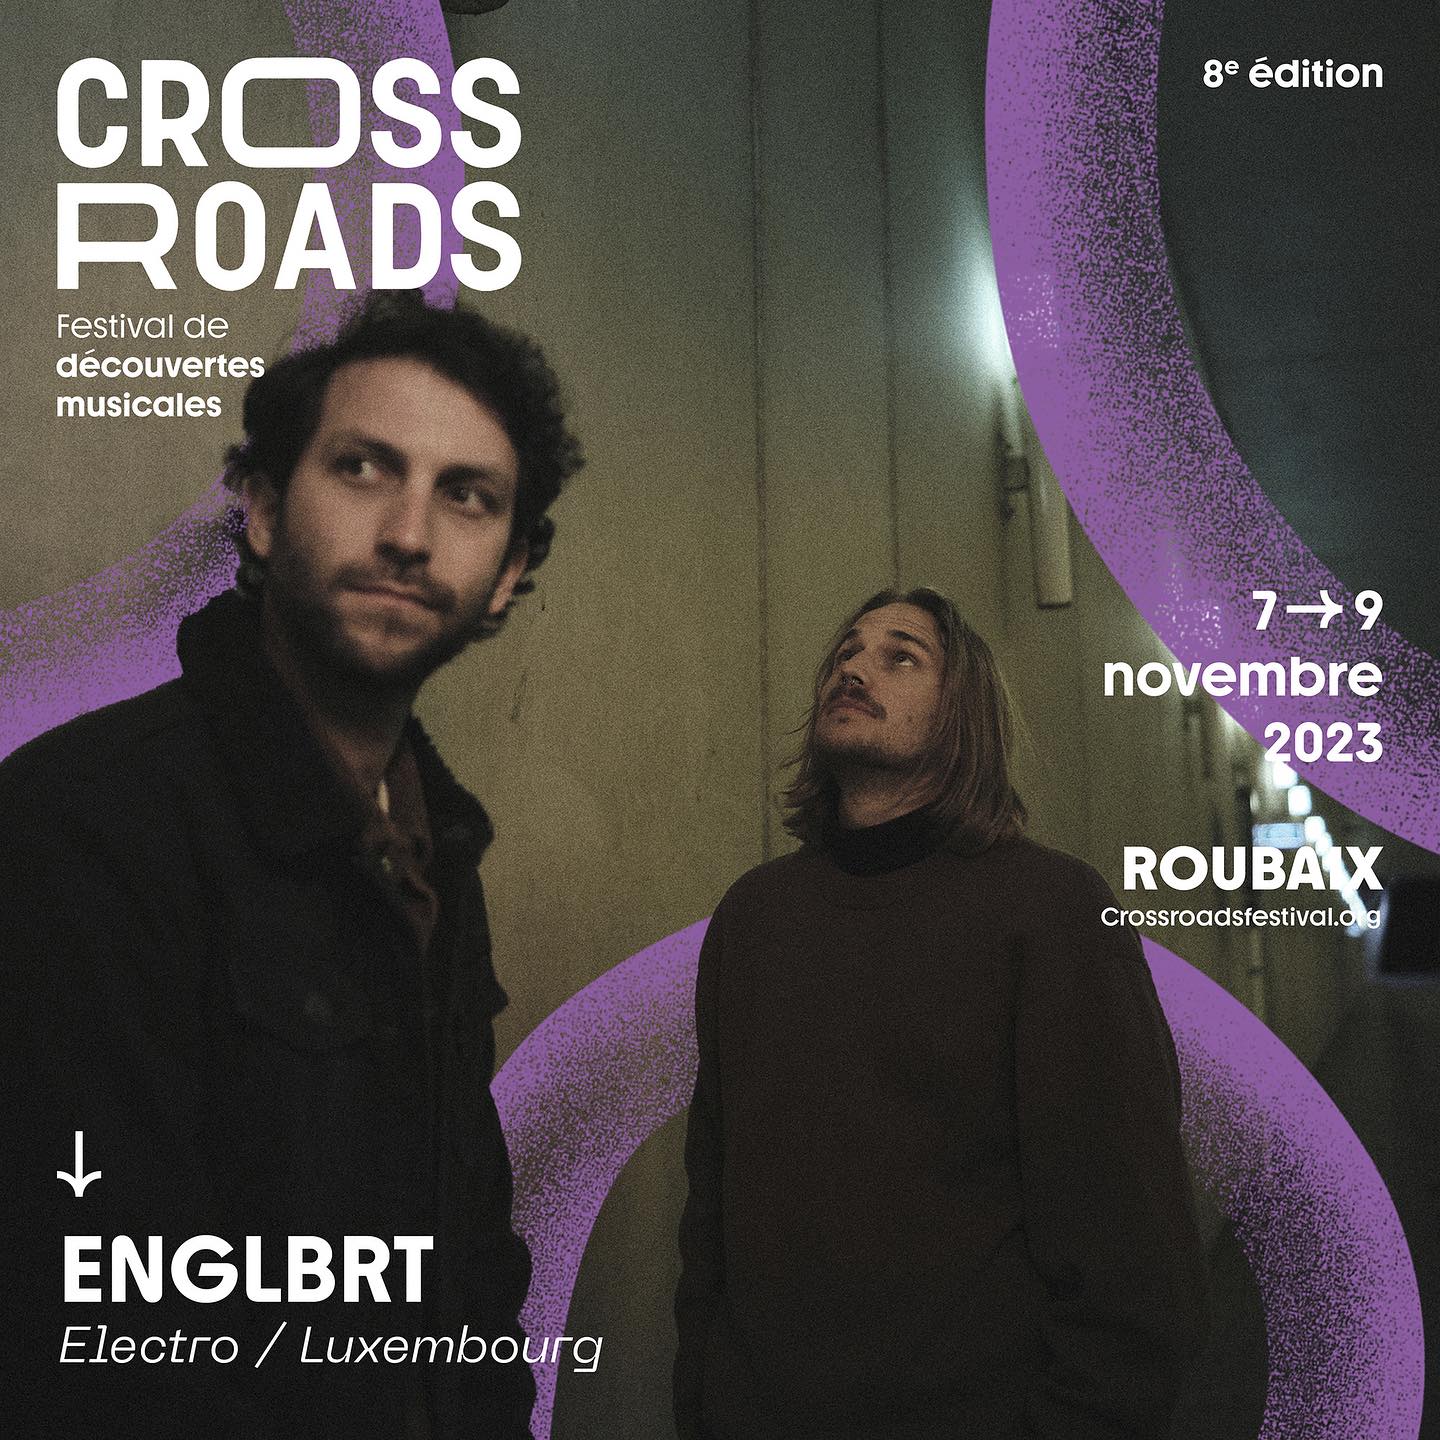 ENGLBRT<br />
"Crossroads Festival"